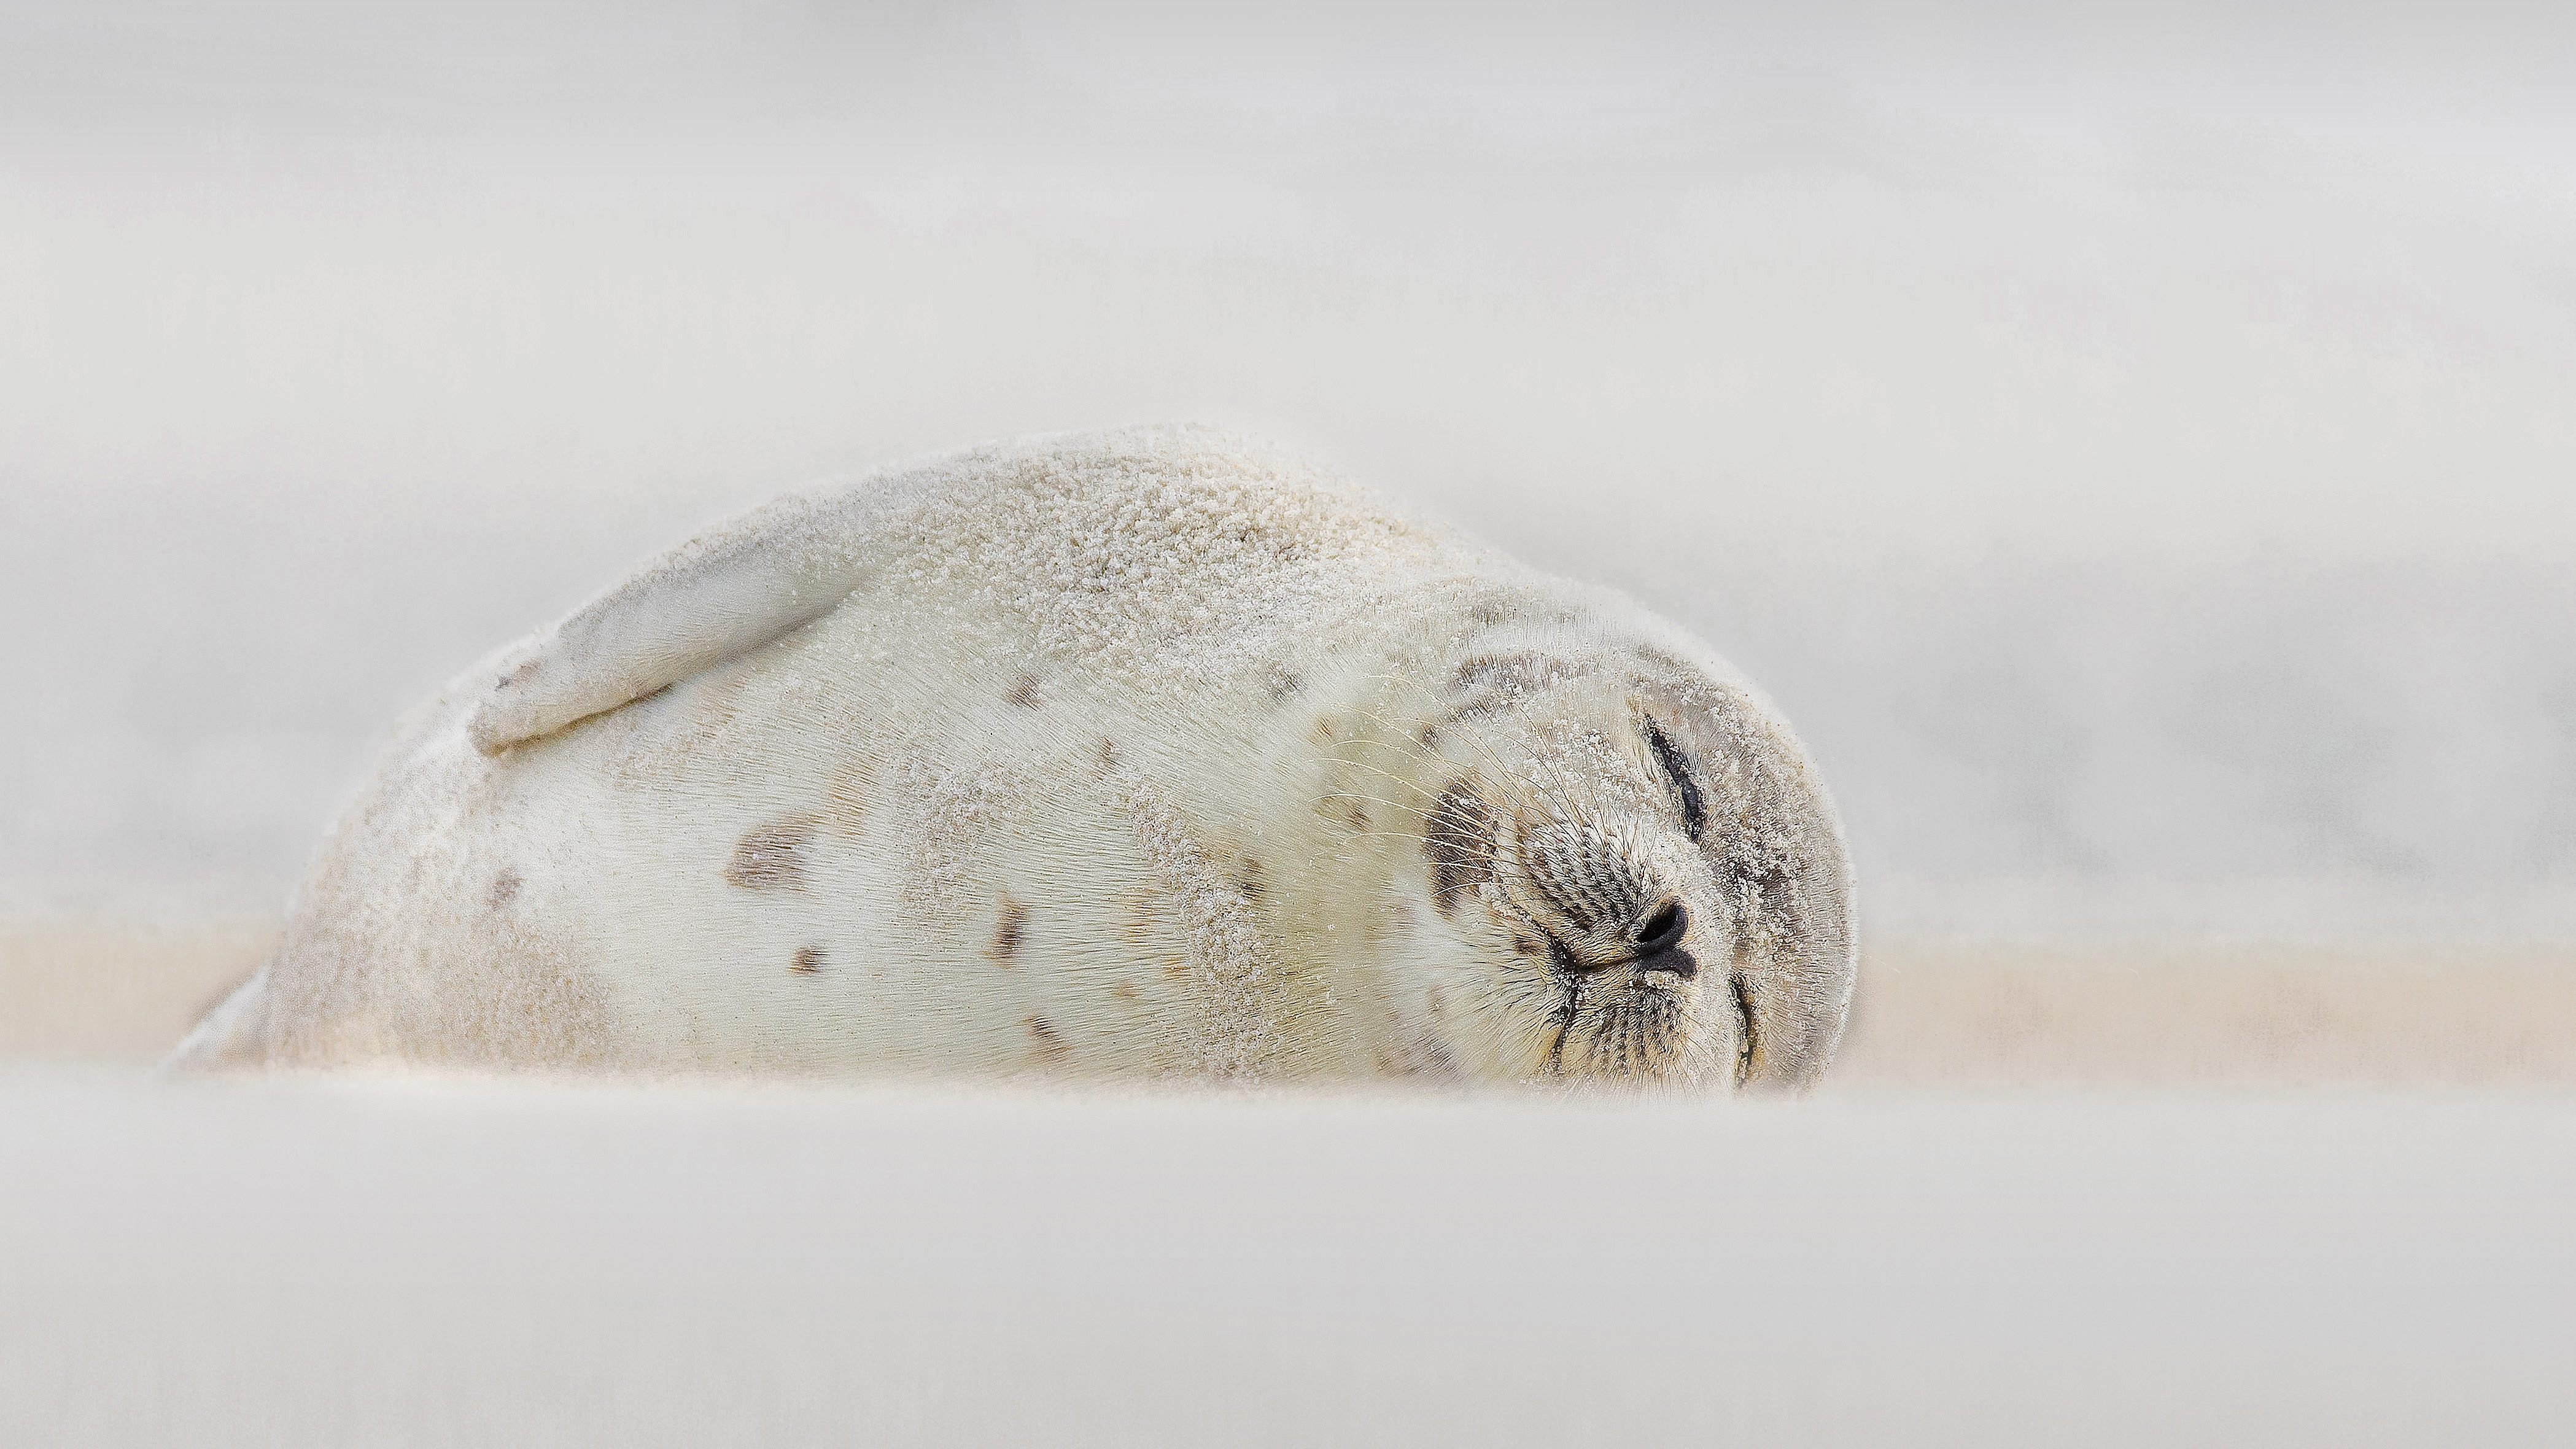 Harp seal sleeping at Jones Beach, Long Island, New York by Vicki Jauron